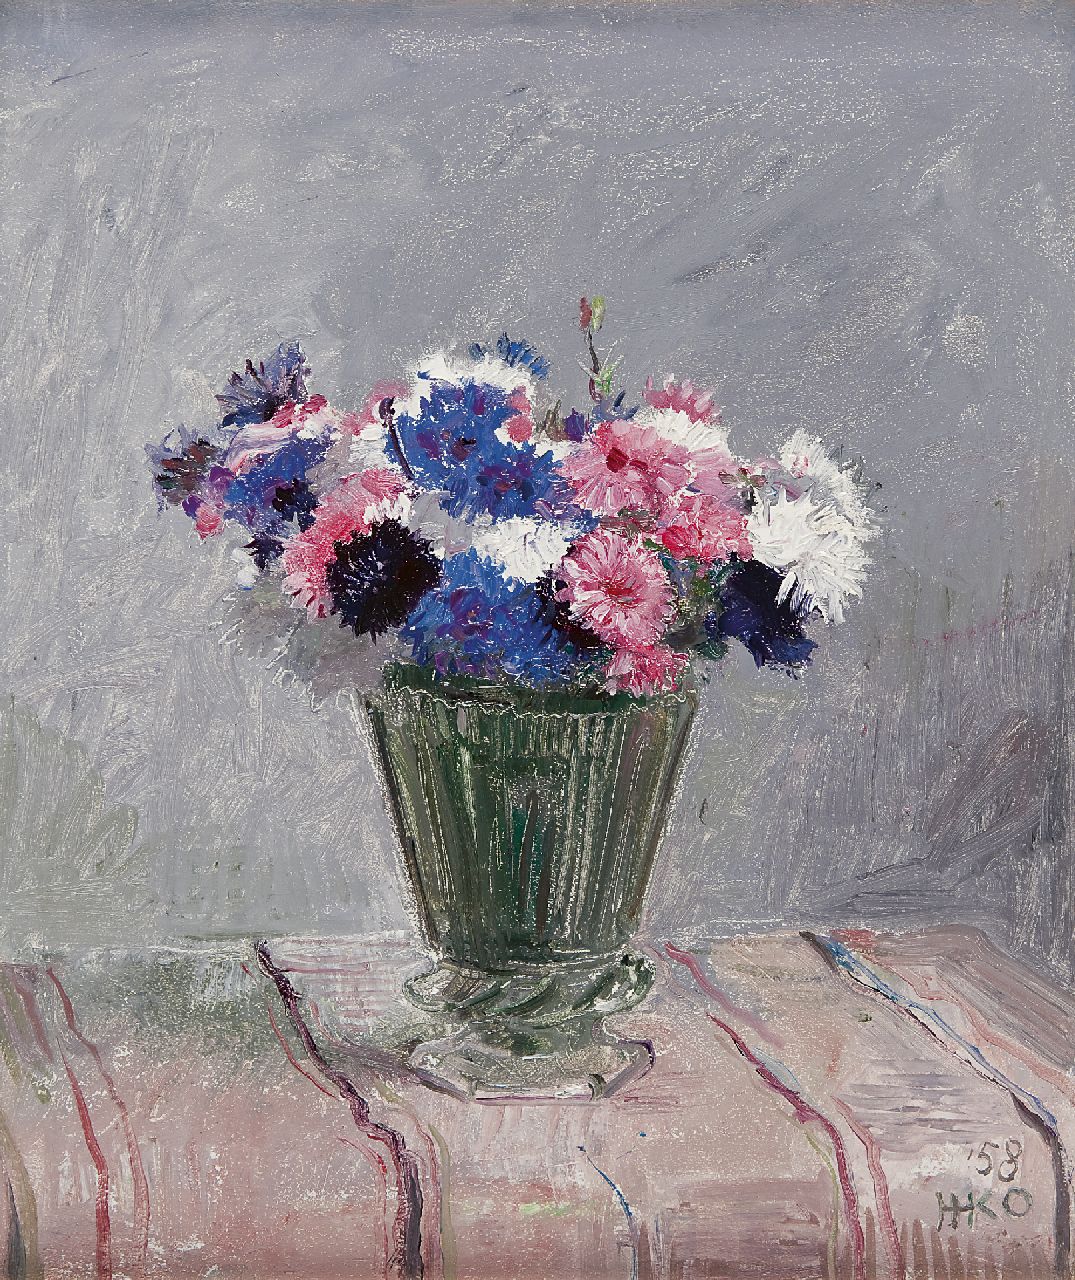 Kamerlingh Onnes H.H.  | 'Harm' Henrick Kamerlingh Onnes, Flowers in a glass vase, oil on painter's board 35.7 x 30.1 cm, signed l.r. with monogram and dated '58